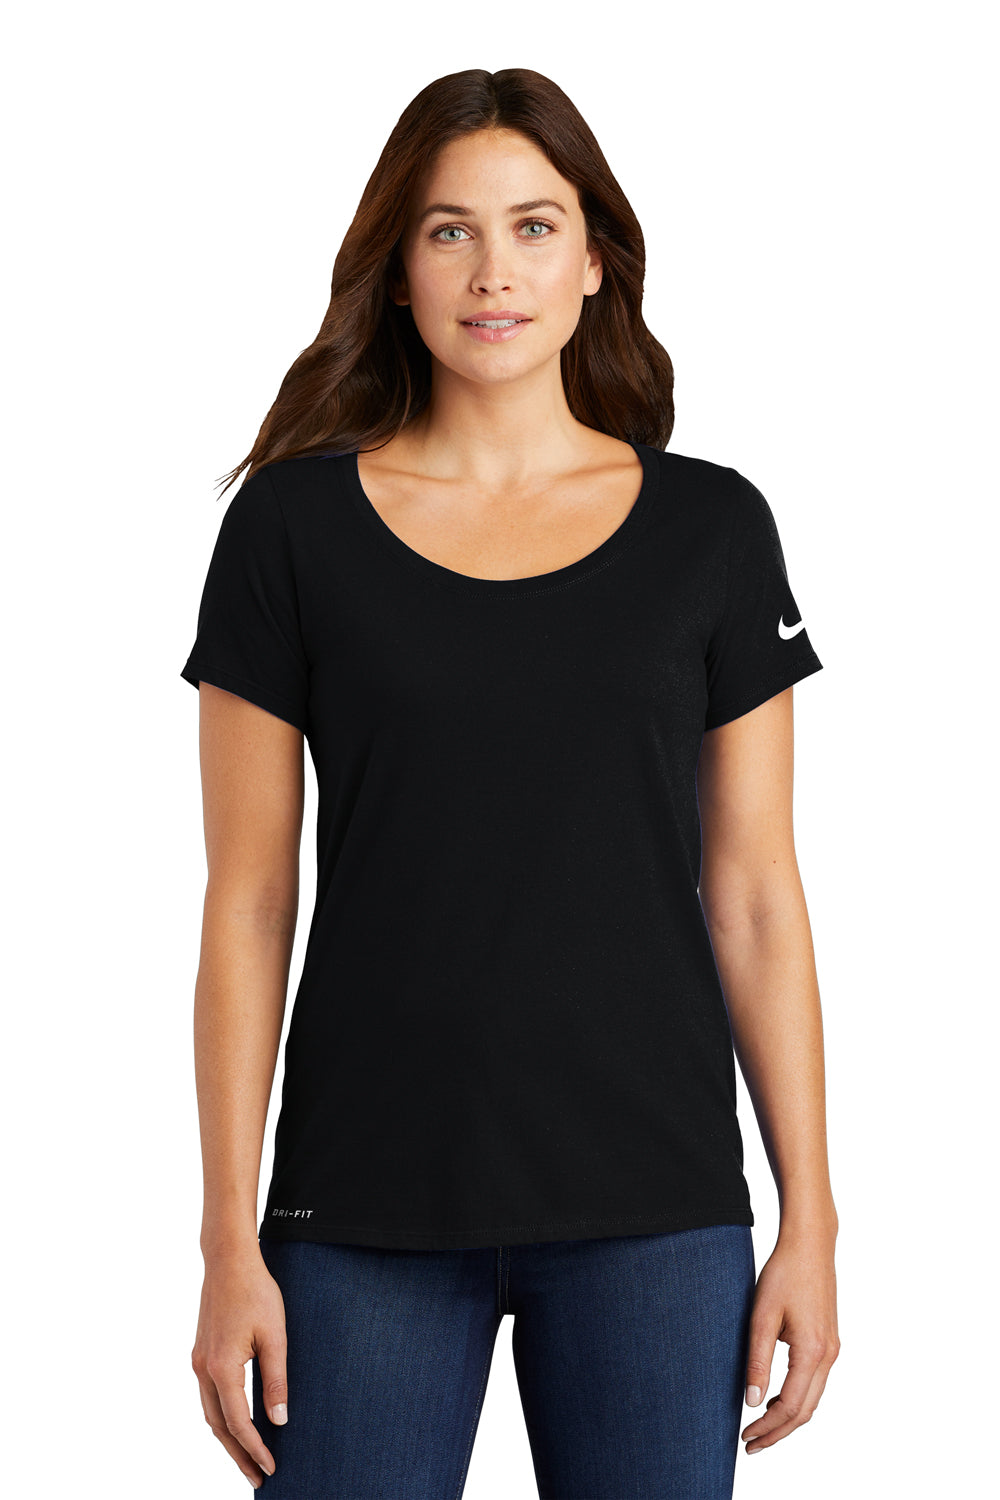 Nike NKBQ5234 Womens Dri-Fit Moisture Wicking Short Sleeve Scoop Neck T-Shirt Black Model Front